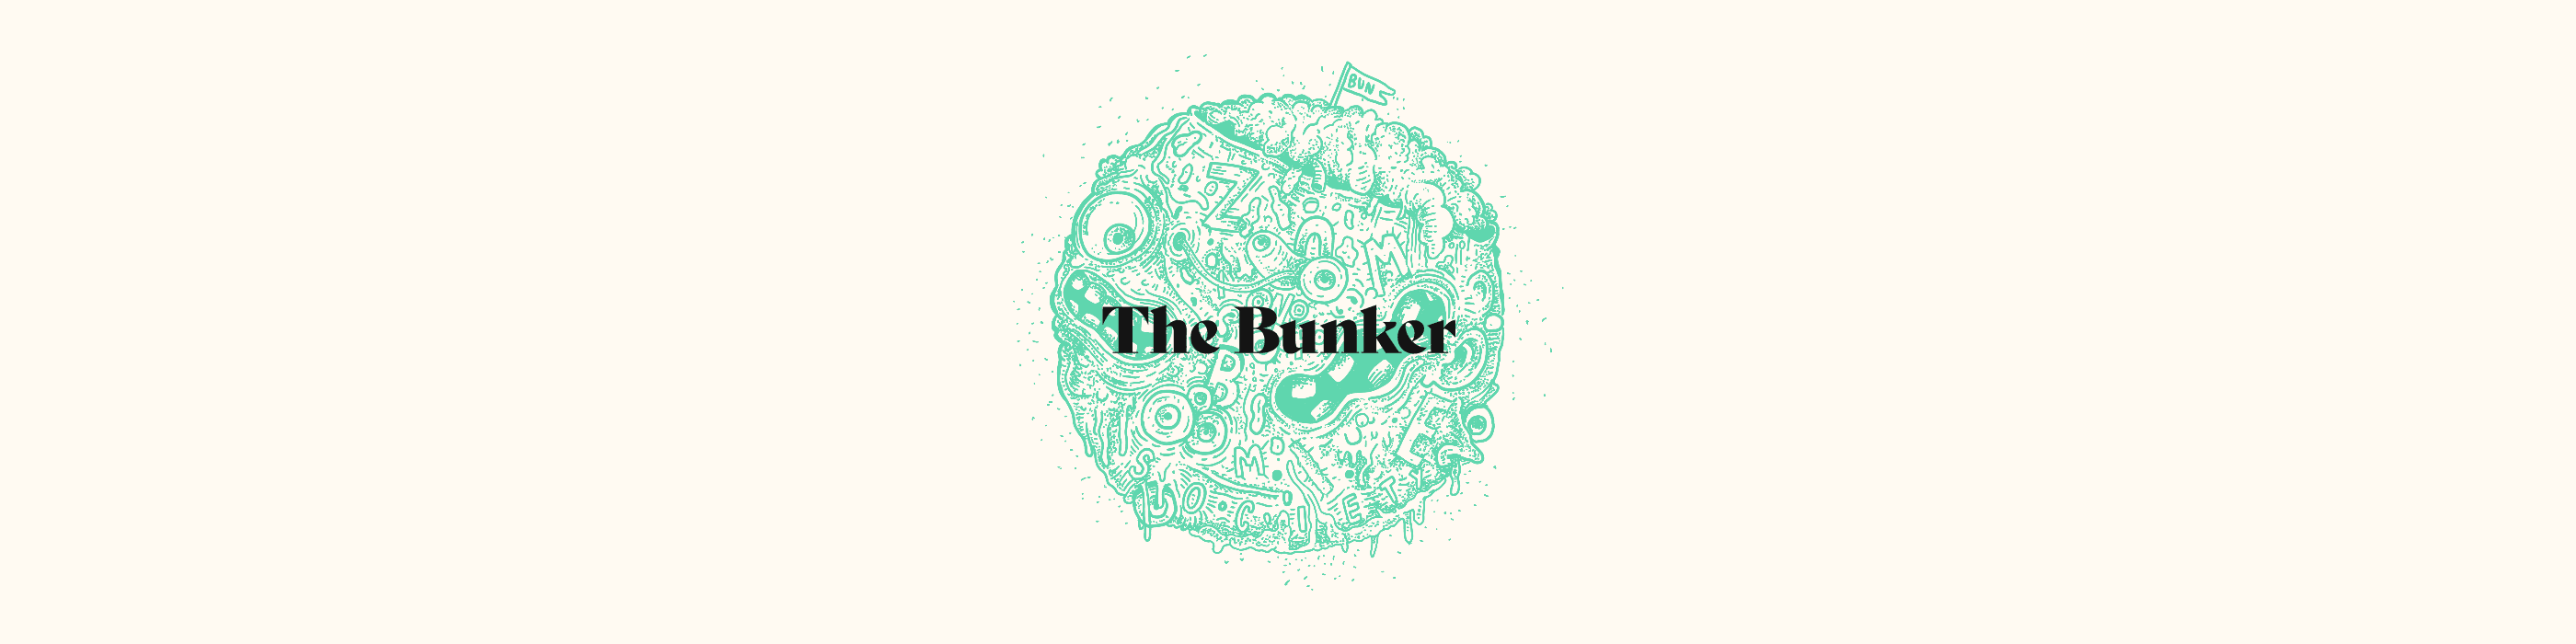 The_Bunker 橫幅